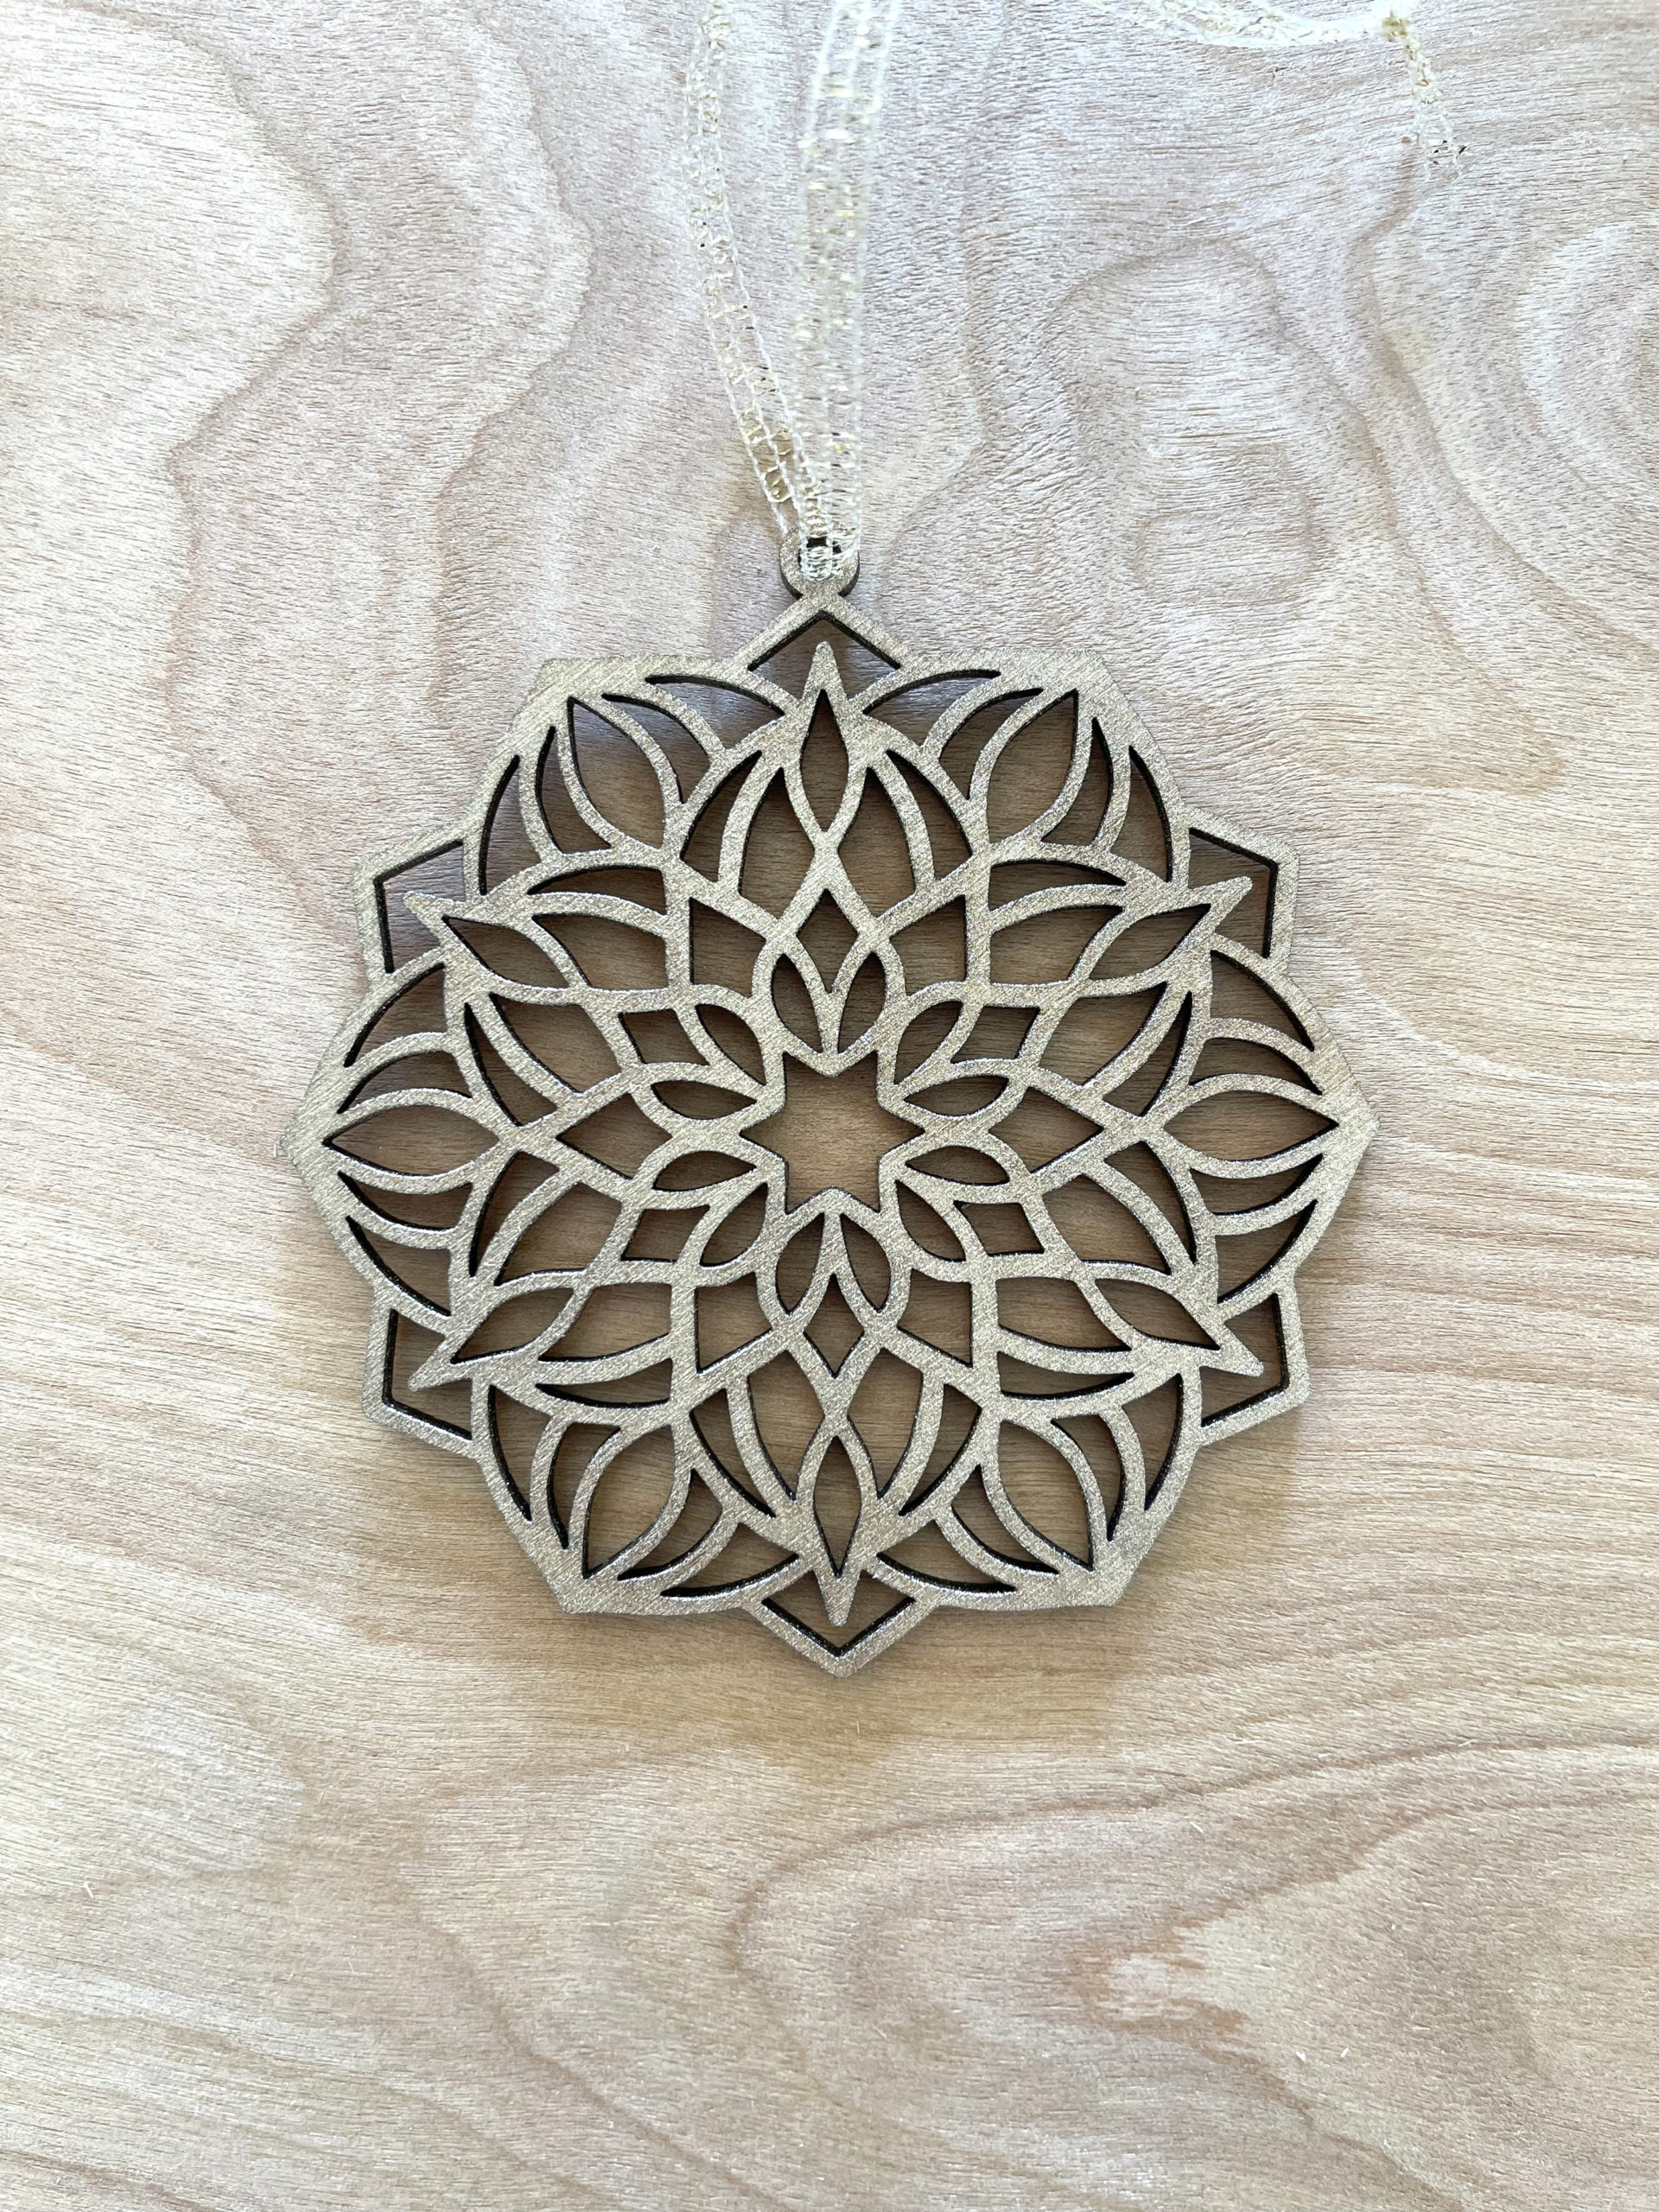 Mandala Ornaments - 2021 Collection